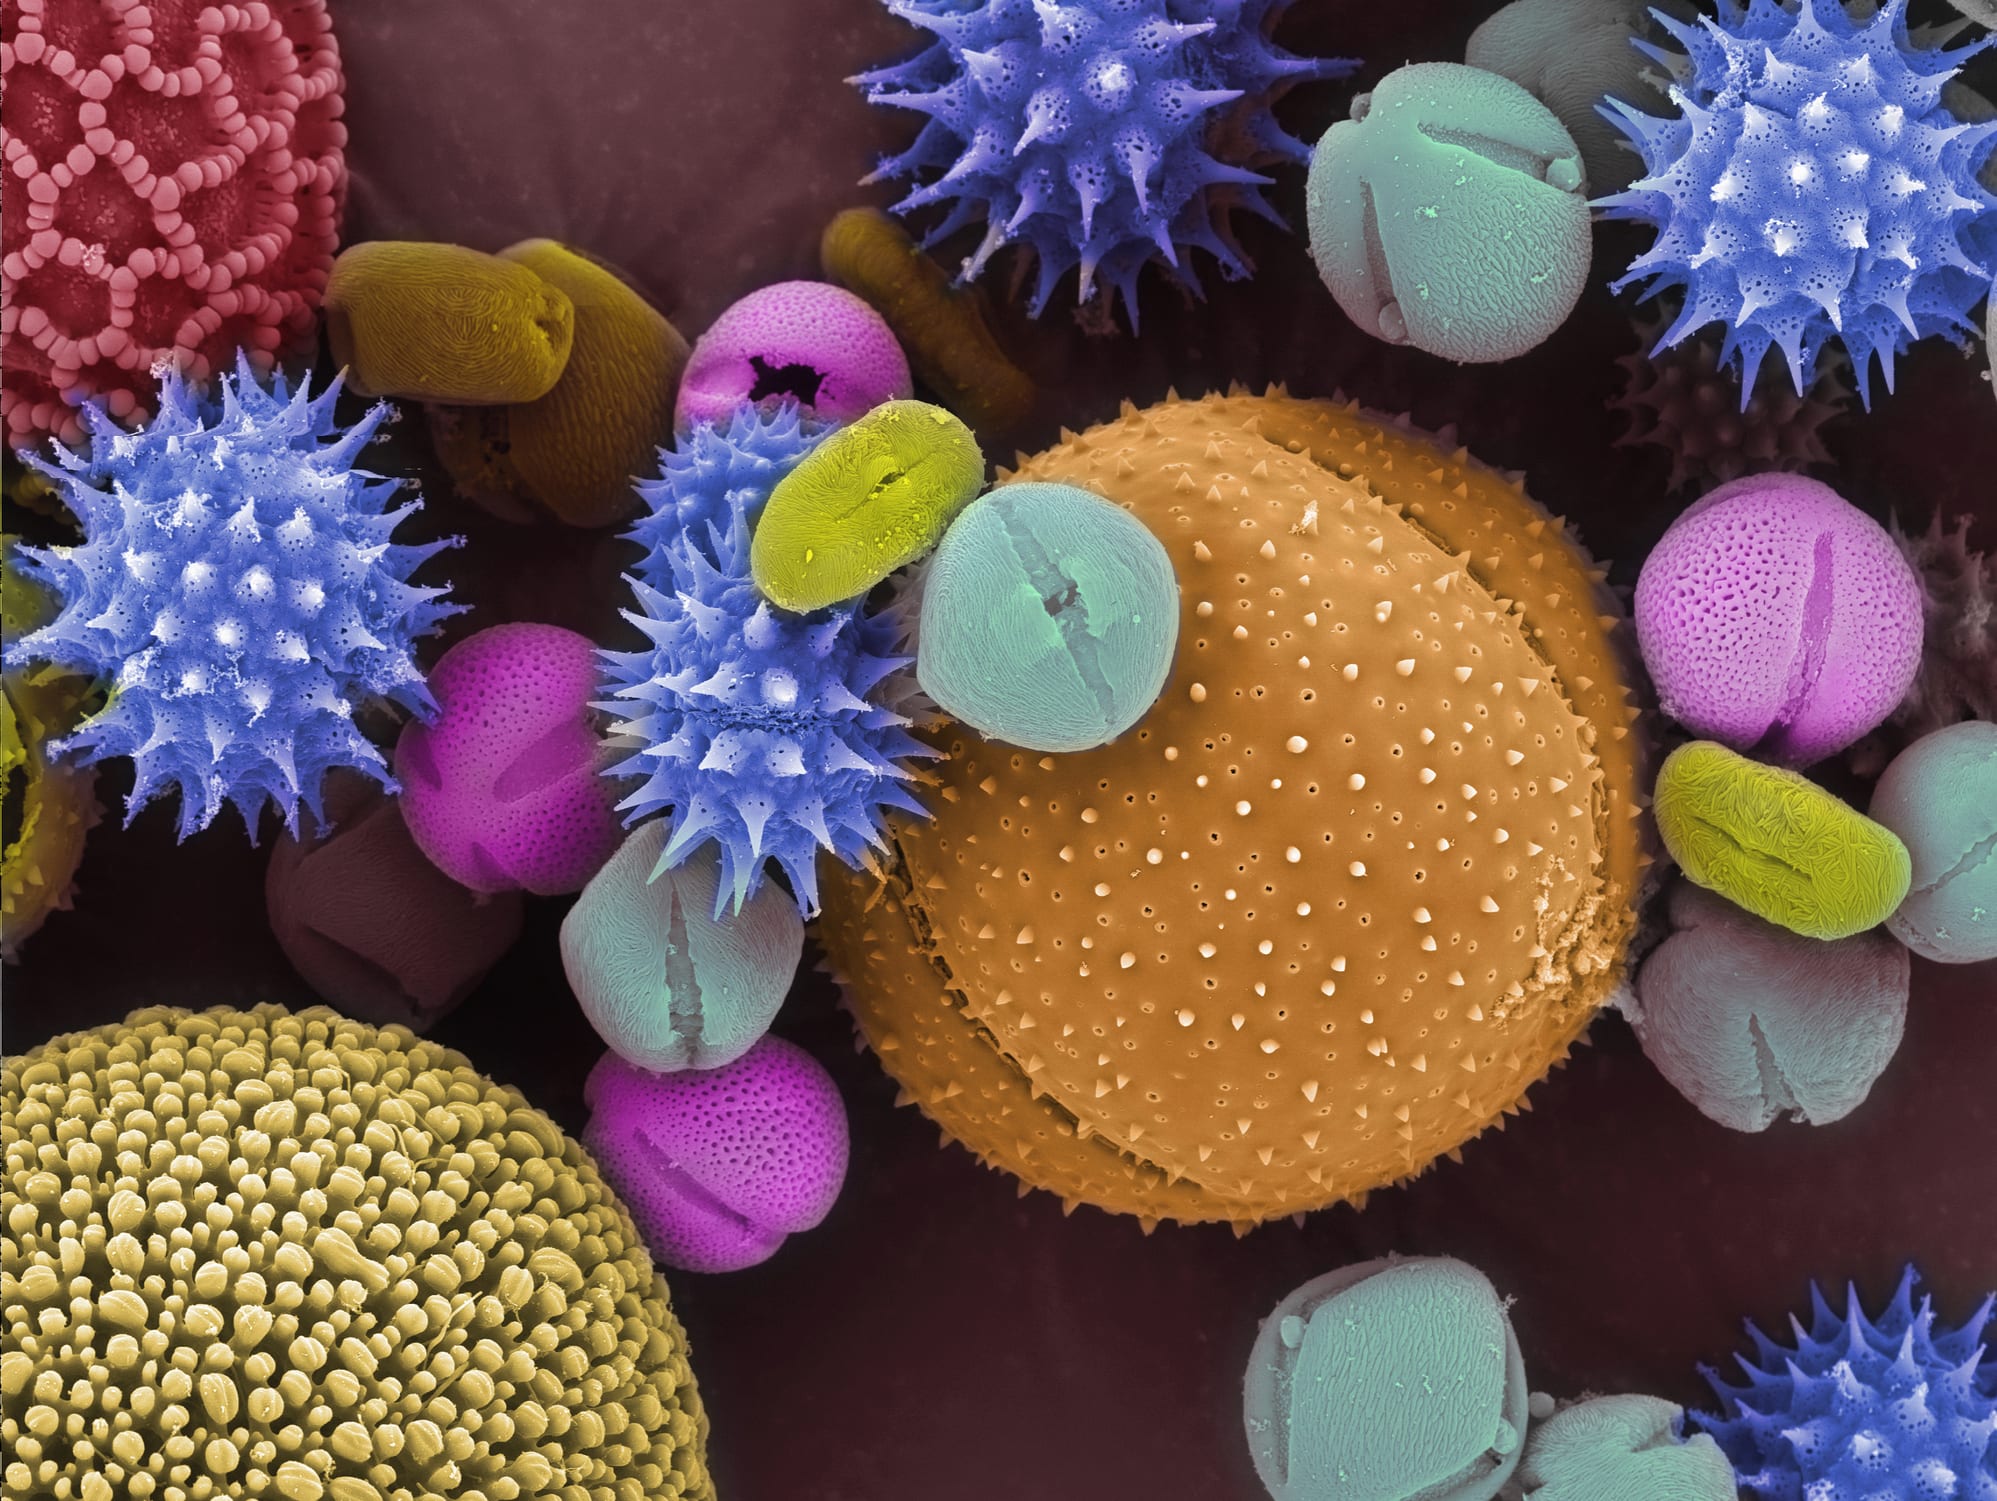 Гены пыльцы. Пыльца микрофотографии. Пыльца электронный микроскоп. Пыльца цветка под микроскопом. Пыльцевые зерна под микроскопом.